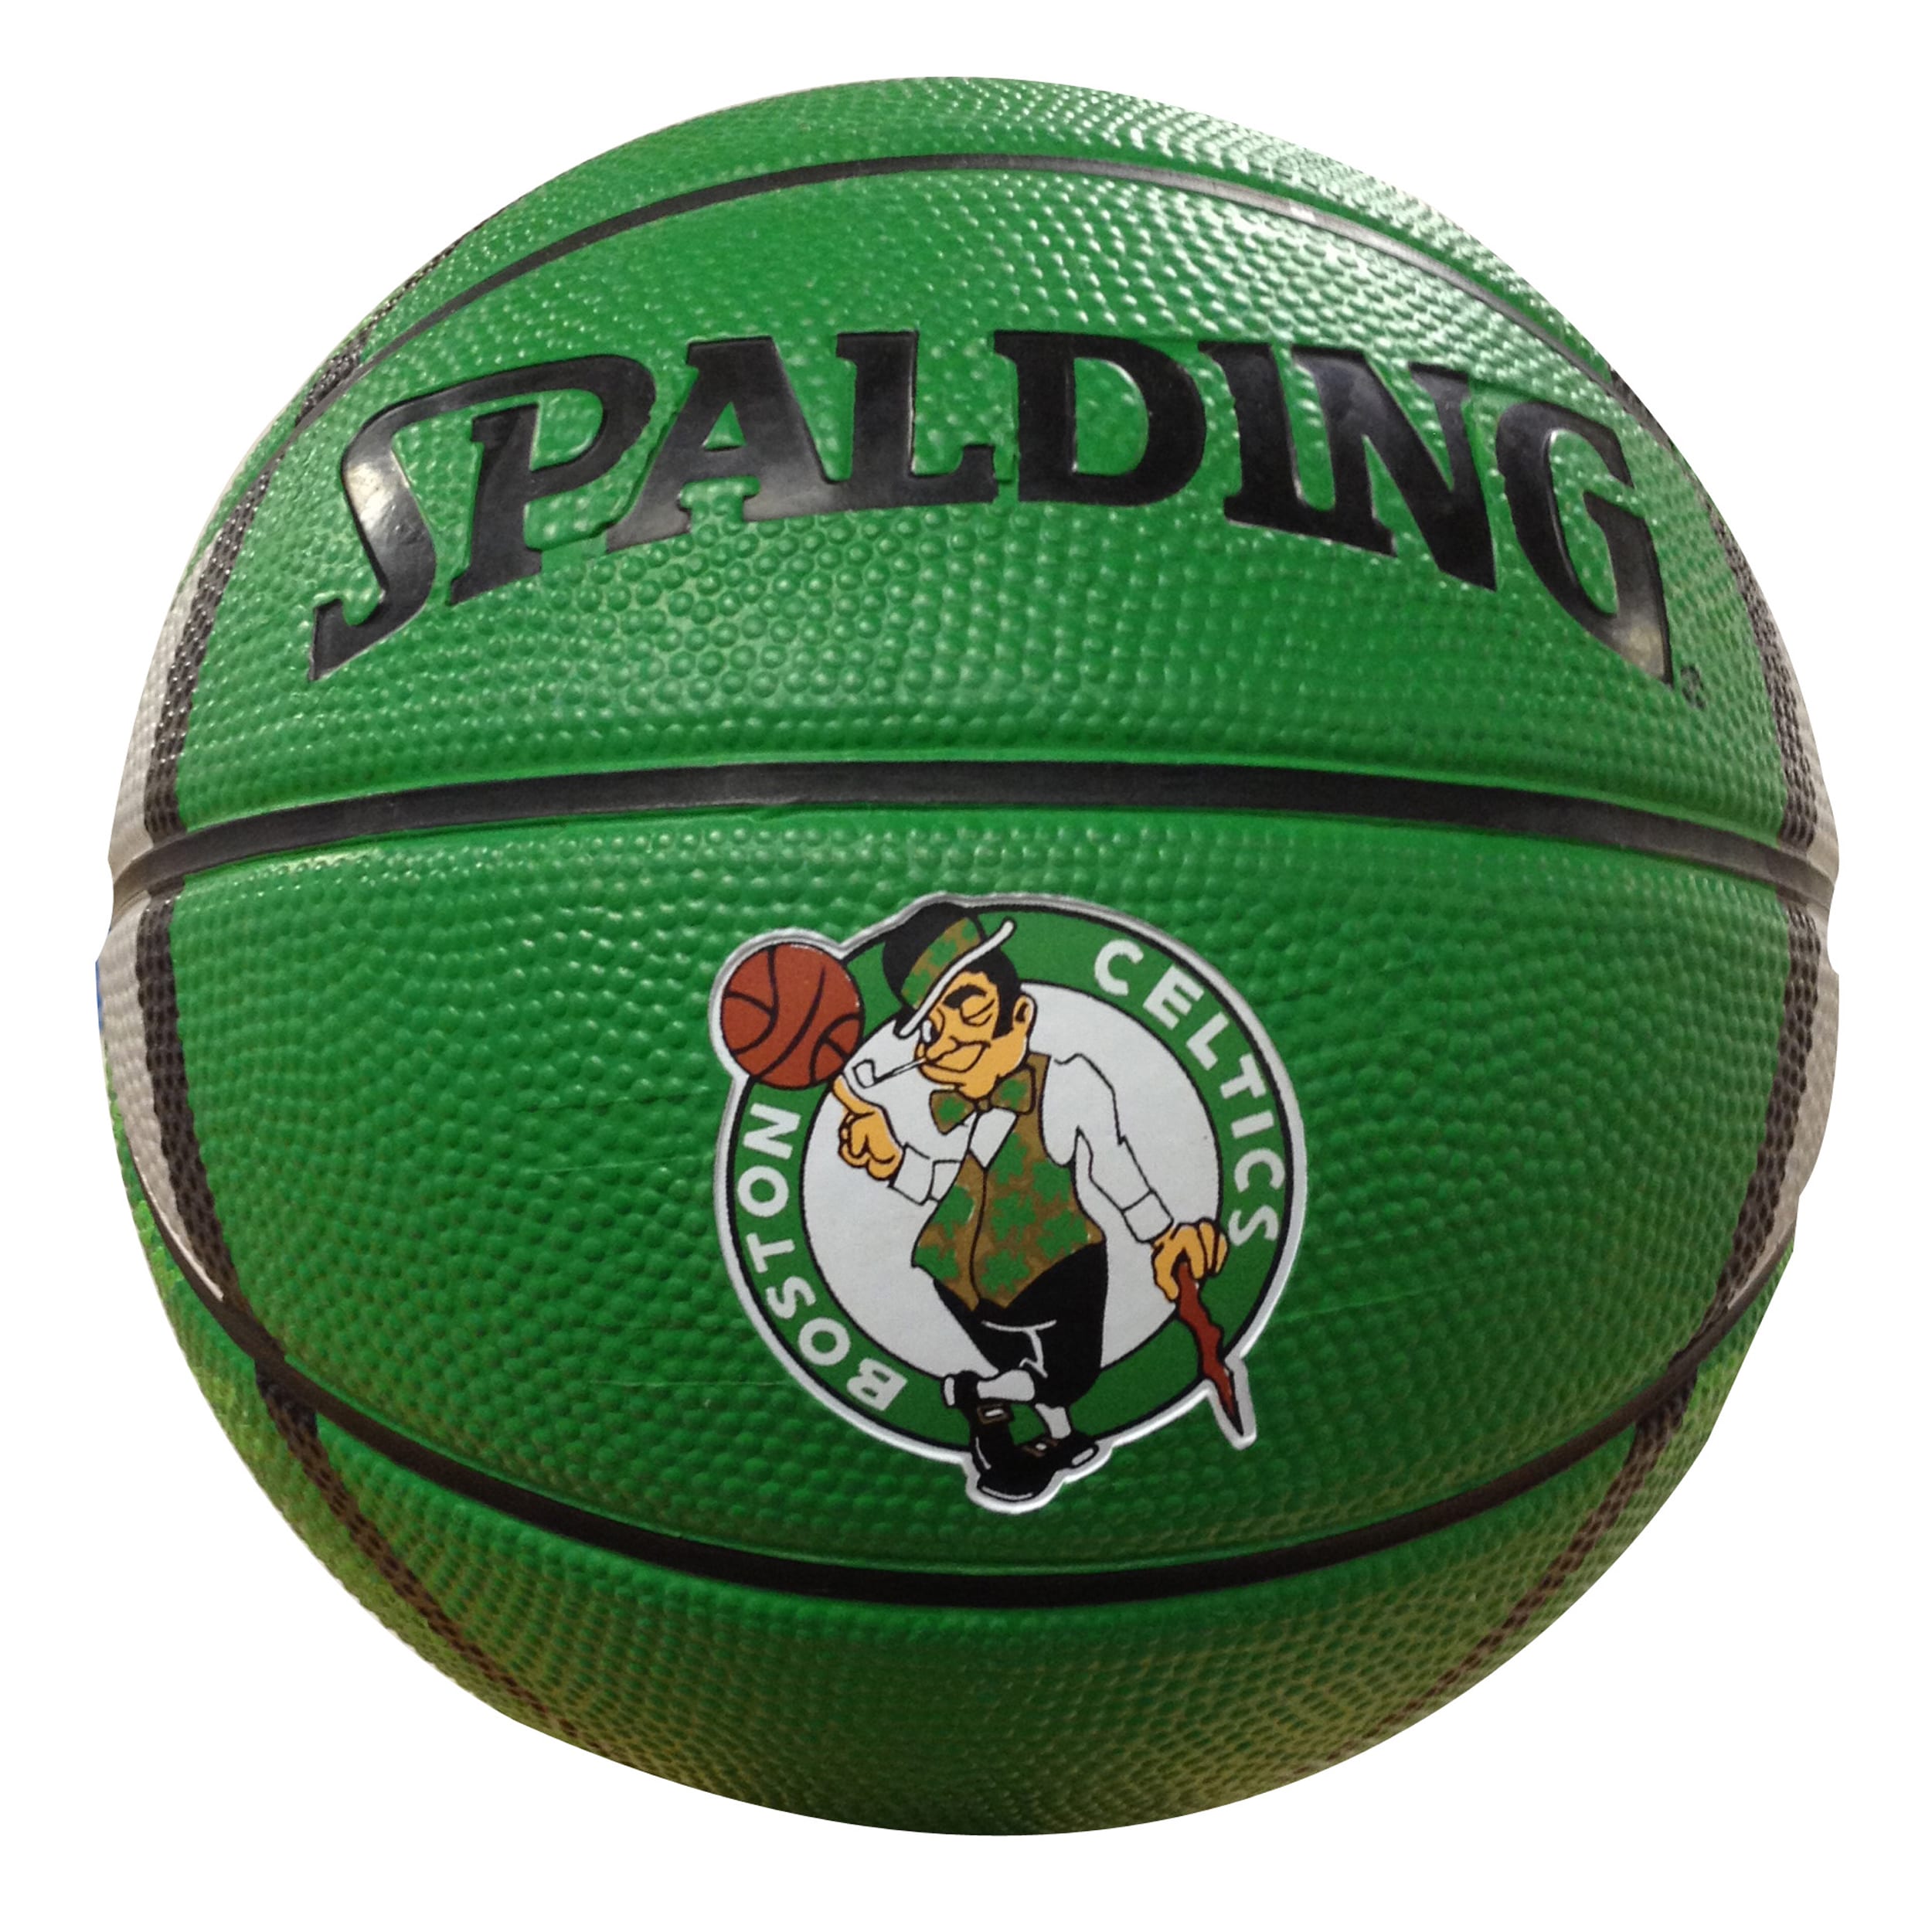 Boston Celtics 7-inch Mini Basketball 